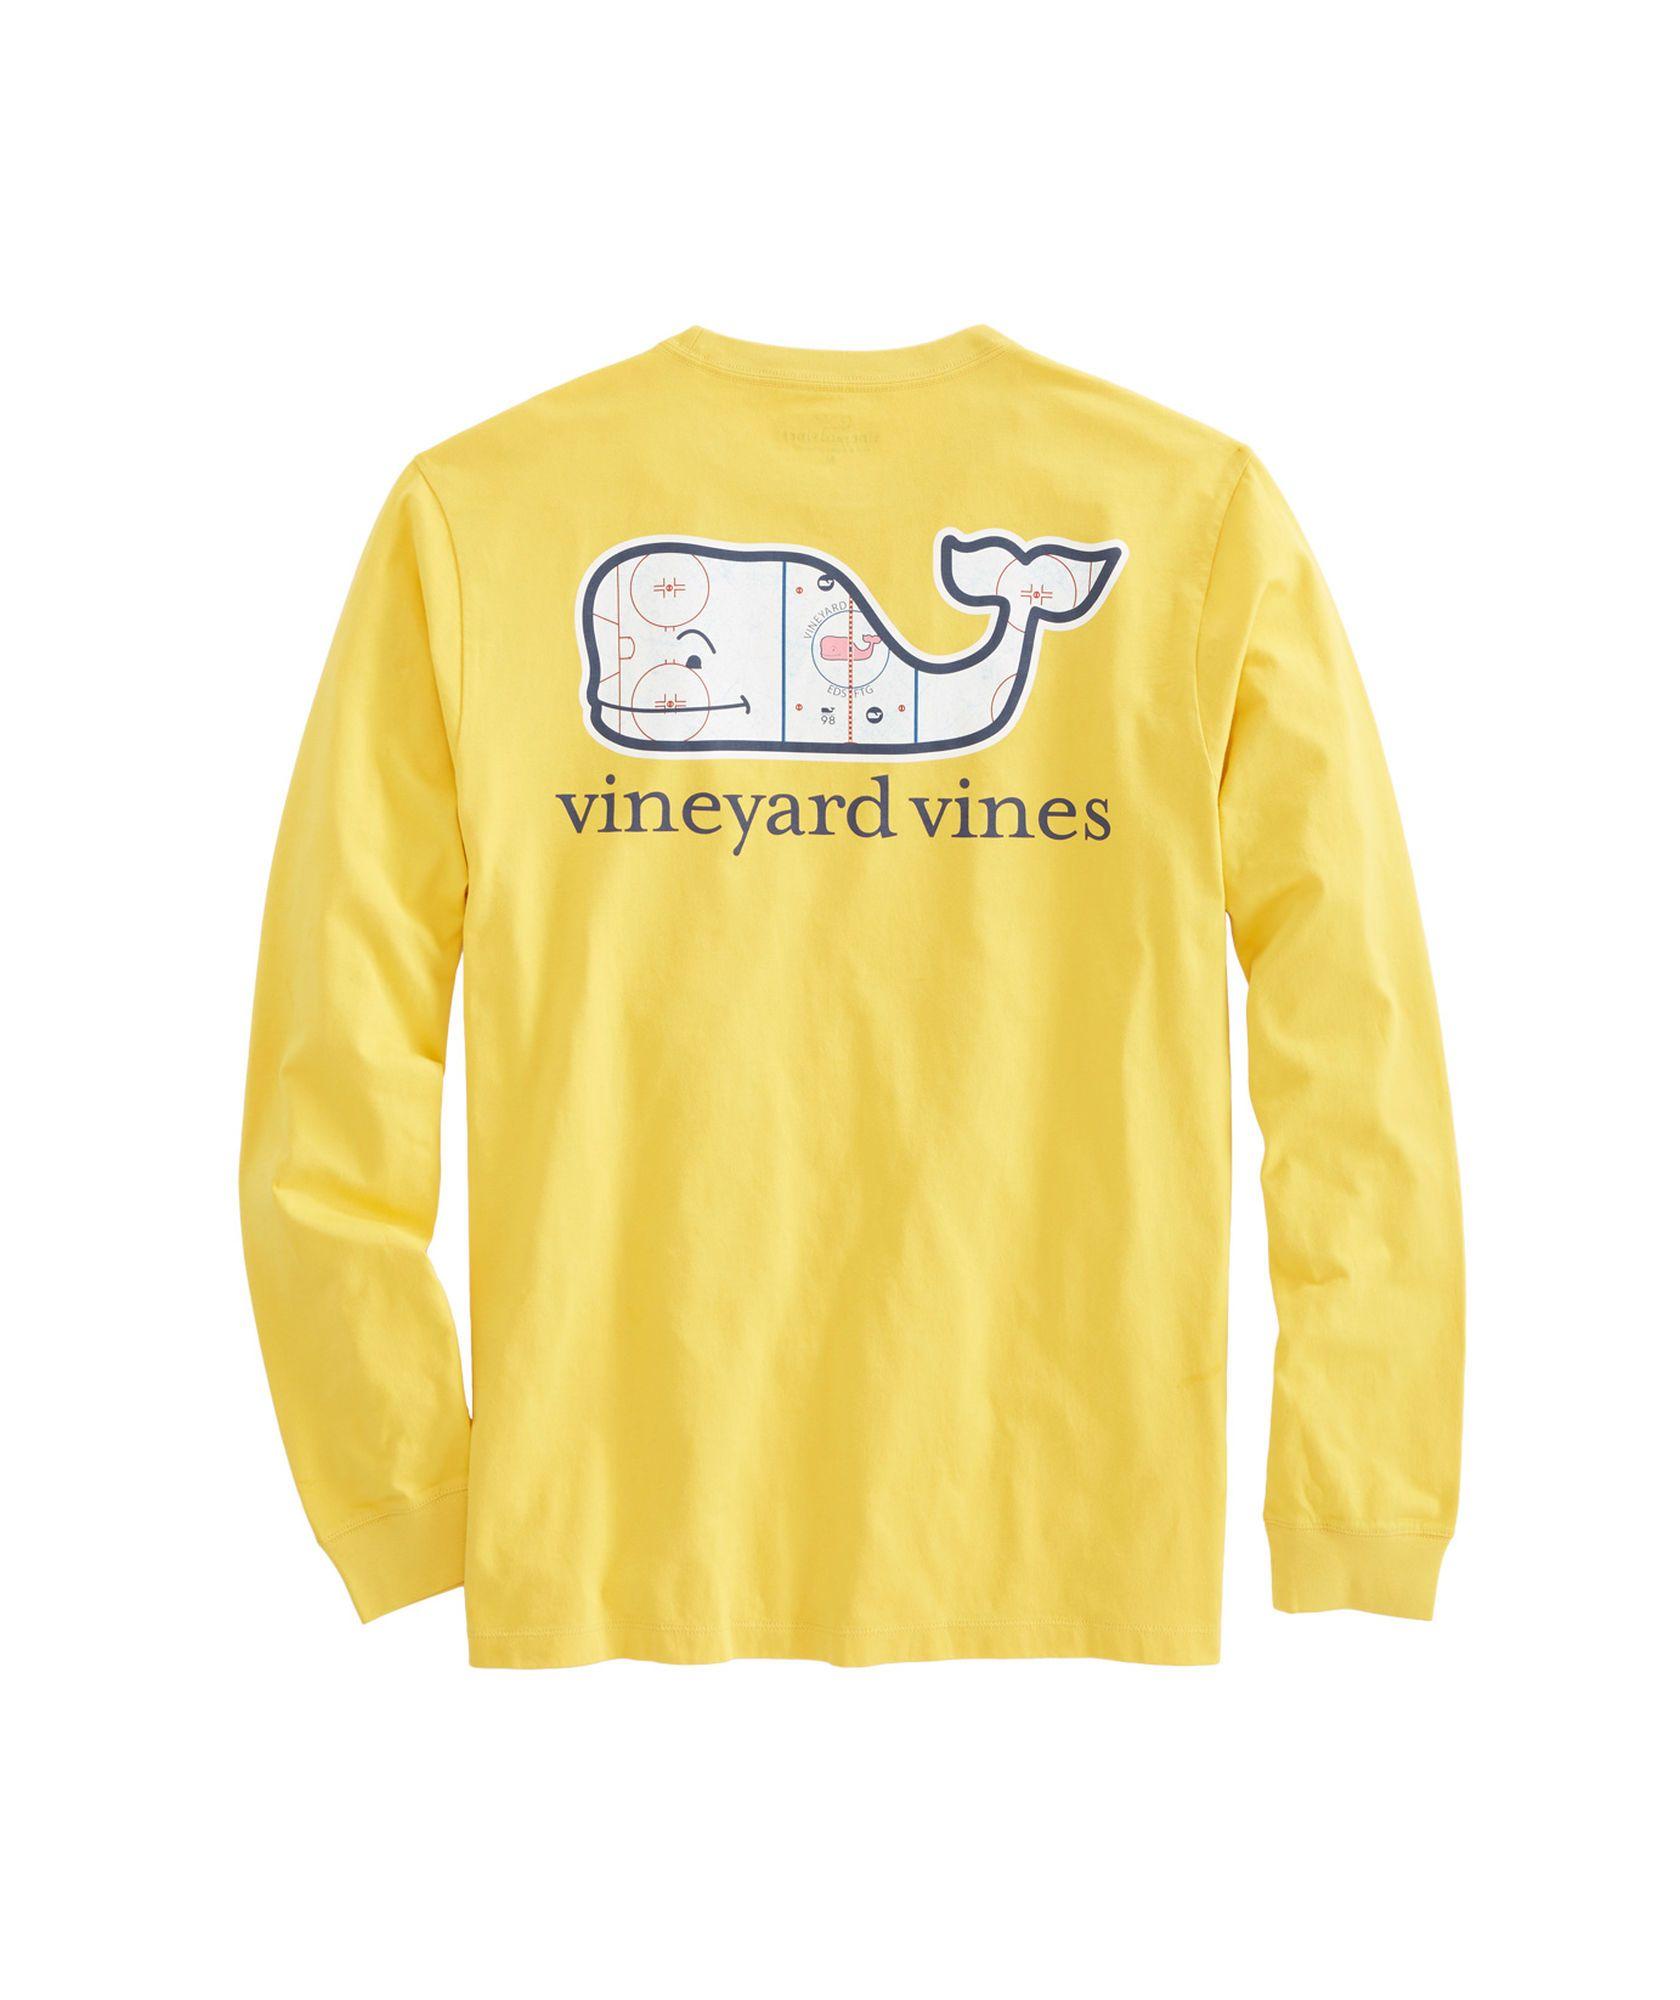 Vineyard Vines Hockey Logo - Vineyard Vines hockey long-sleeved shirt | Style | Pinterest ...